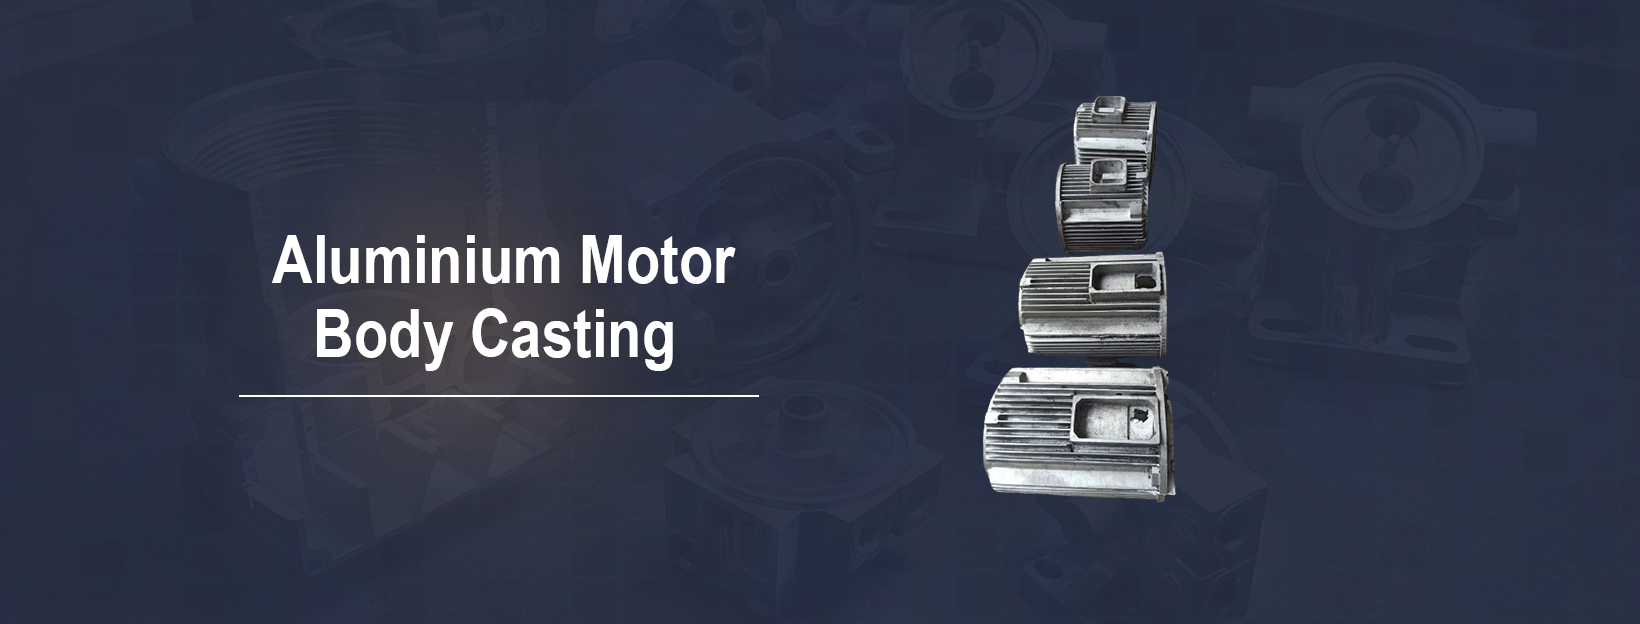 Aluminium Motor Body Casting